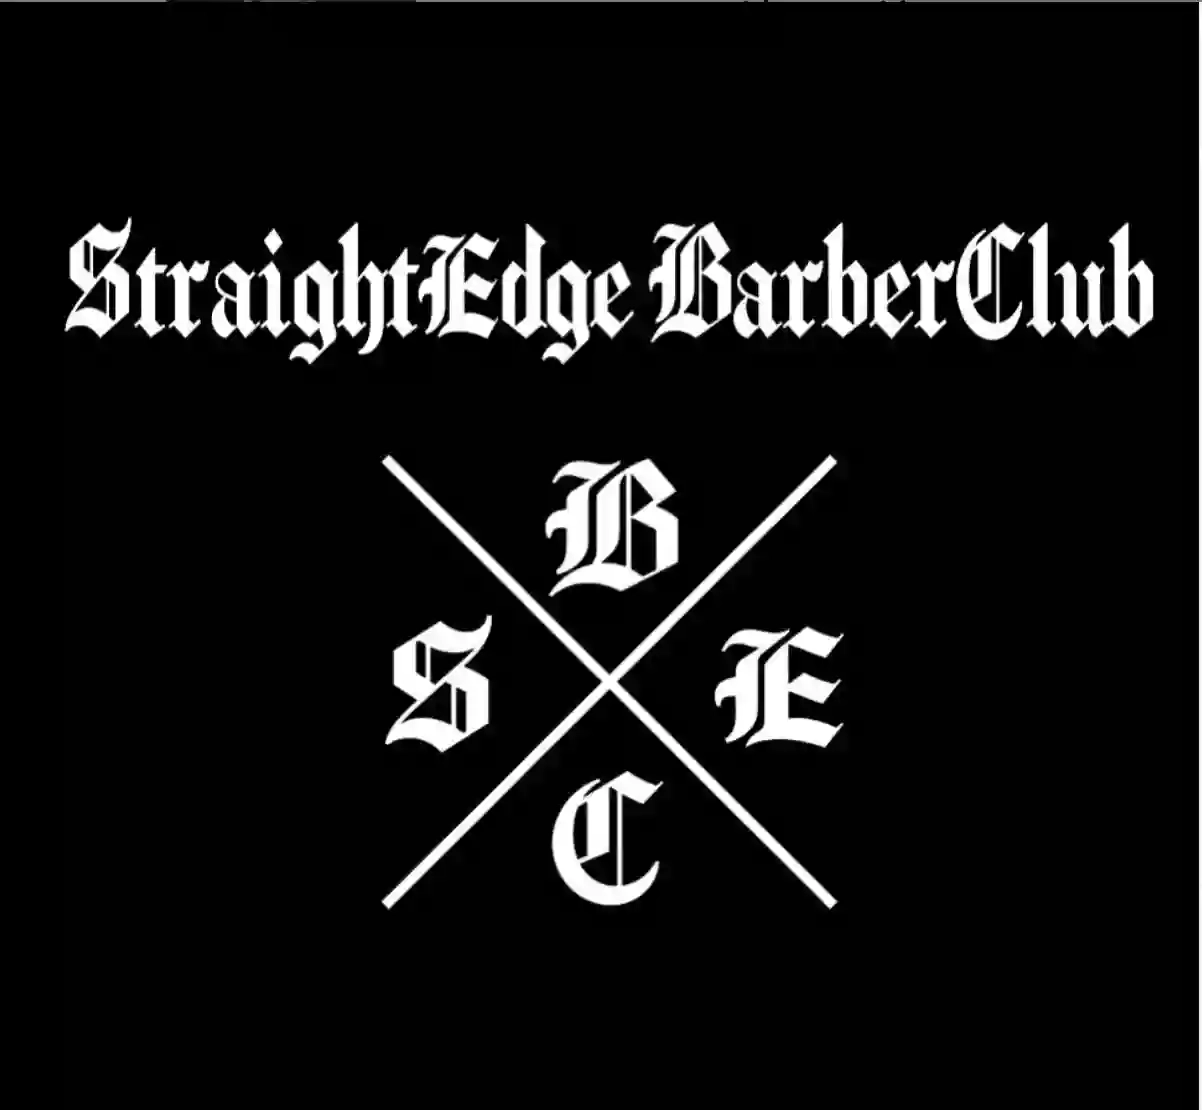 Straight edge barber club